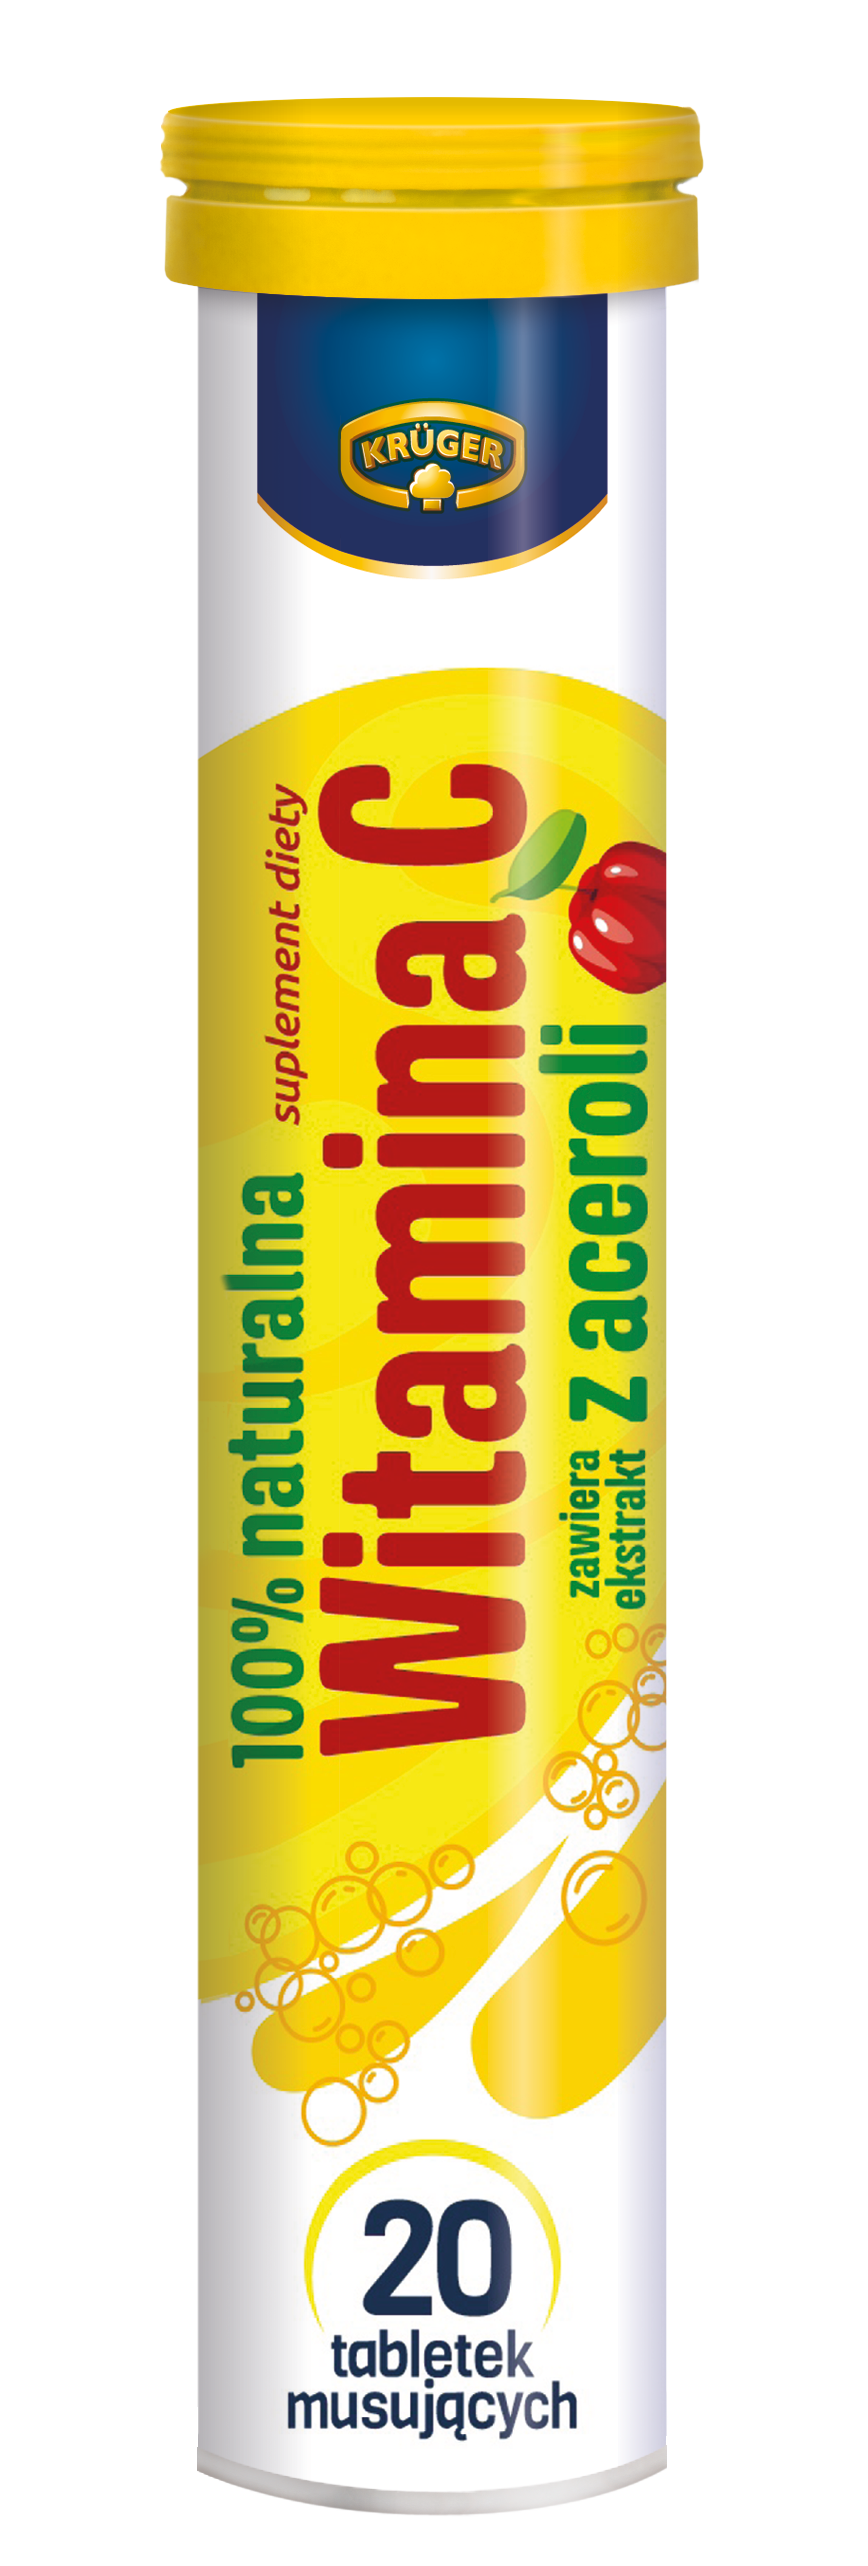 Krüger 100% natural Vitamin C Effervescent tablets with cherry flavor